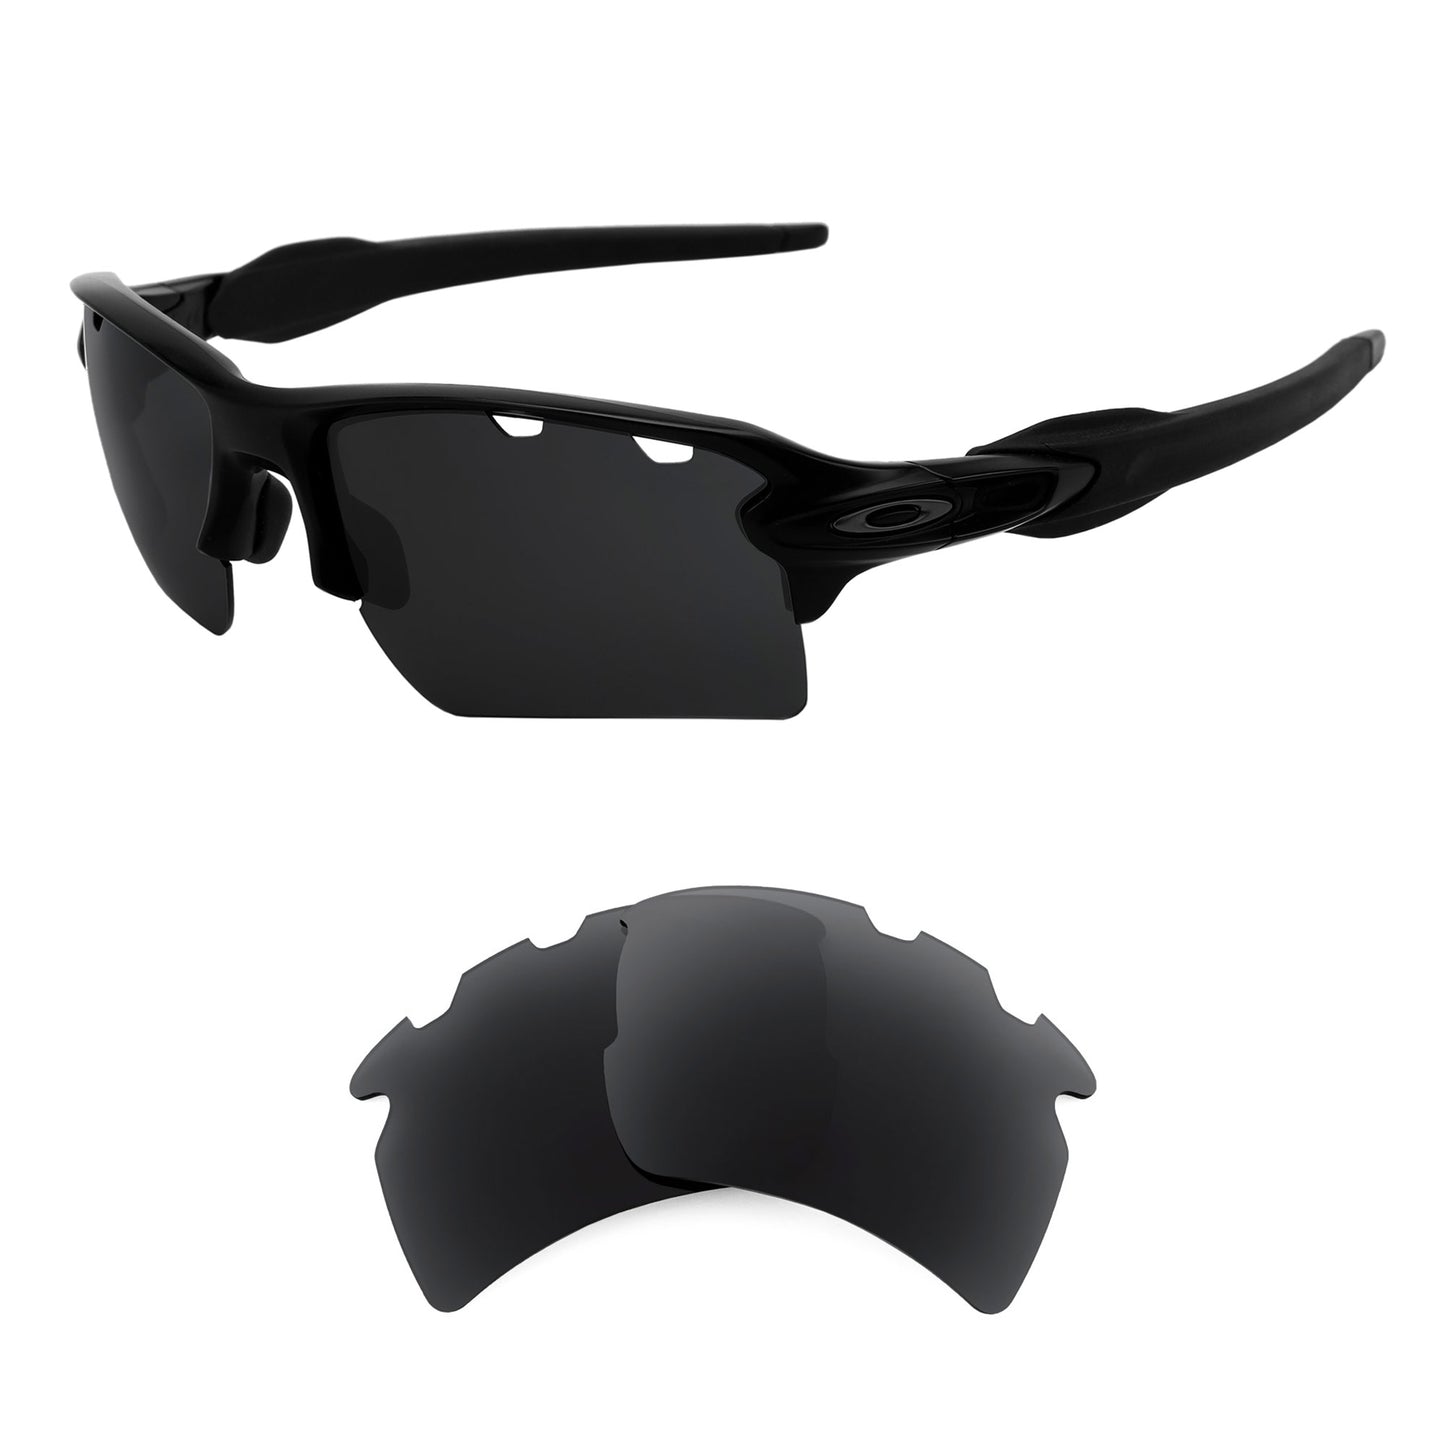 Oakley Flak 2.0 XL Vented (Low Bridge Fit) sunglasses with replacement lenses